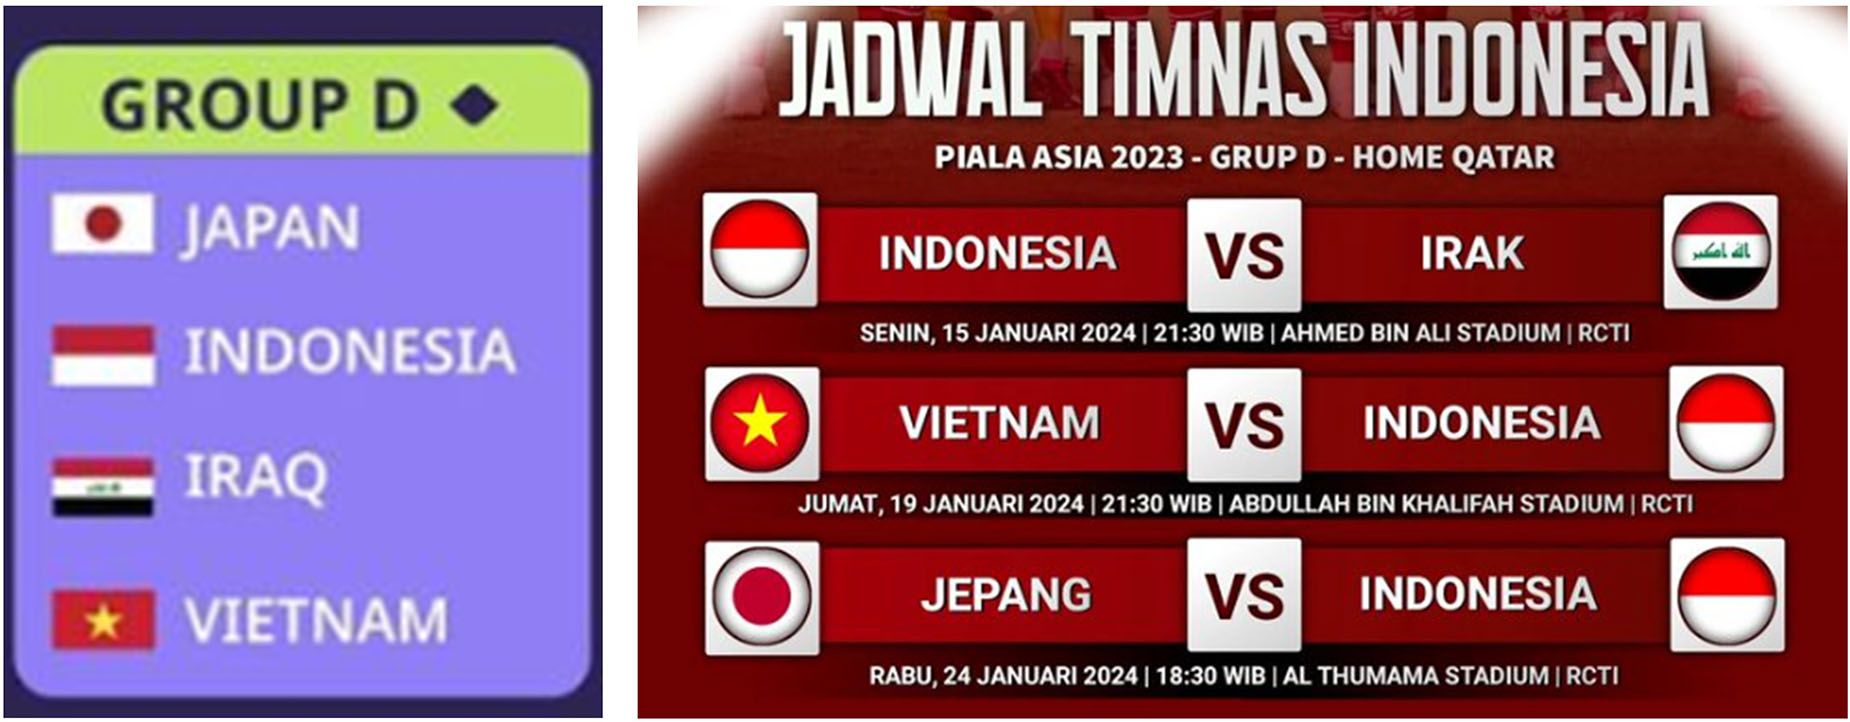 (Kiri) Grup D, tempat Indonesia; (Kanan) Jadwal Timnas Indonesia 